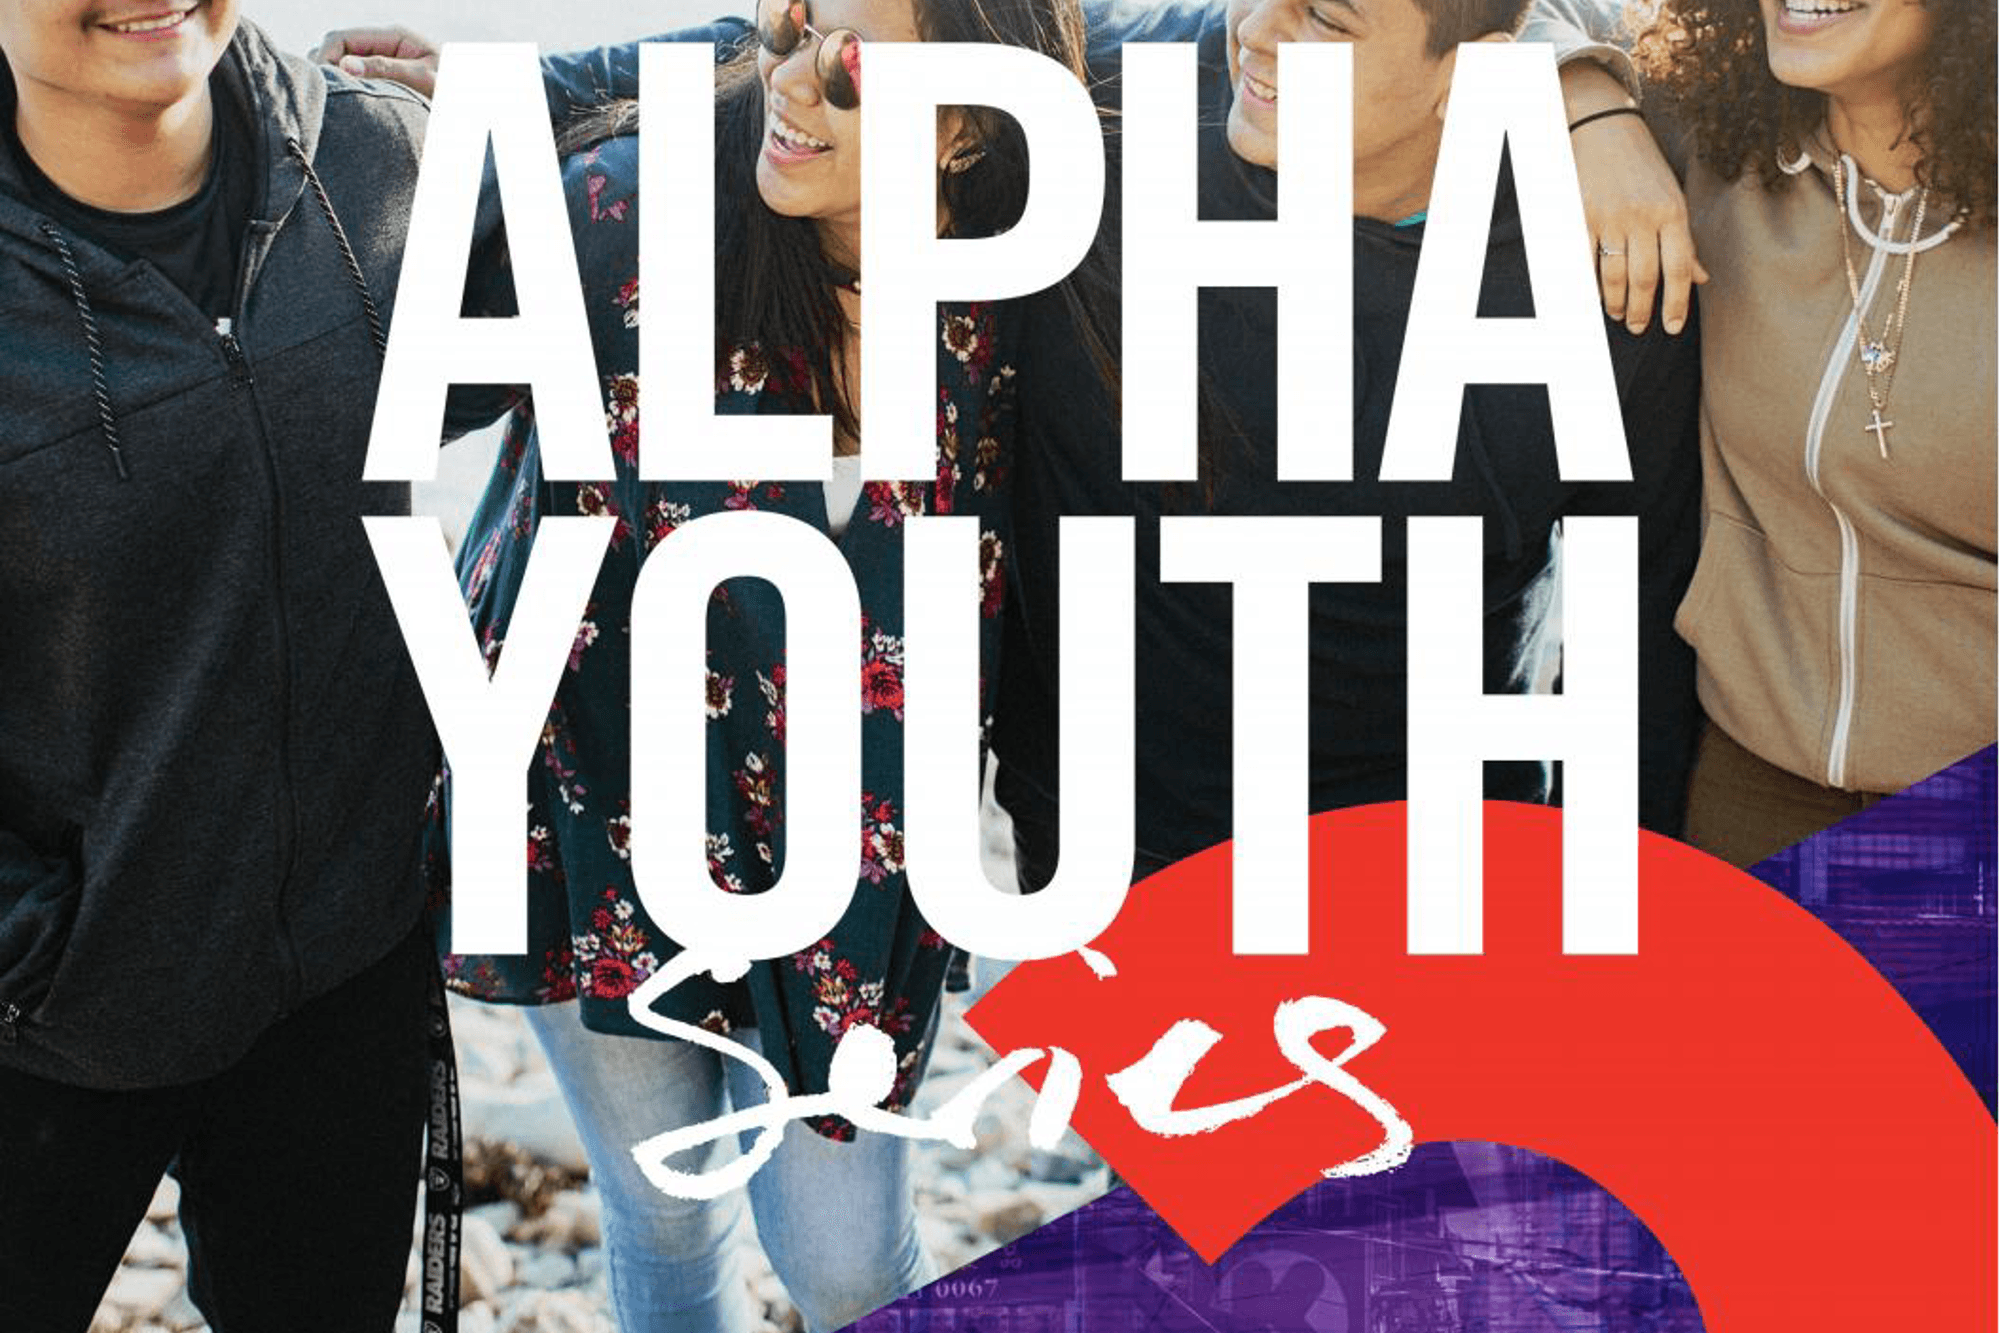 Alpha Youth